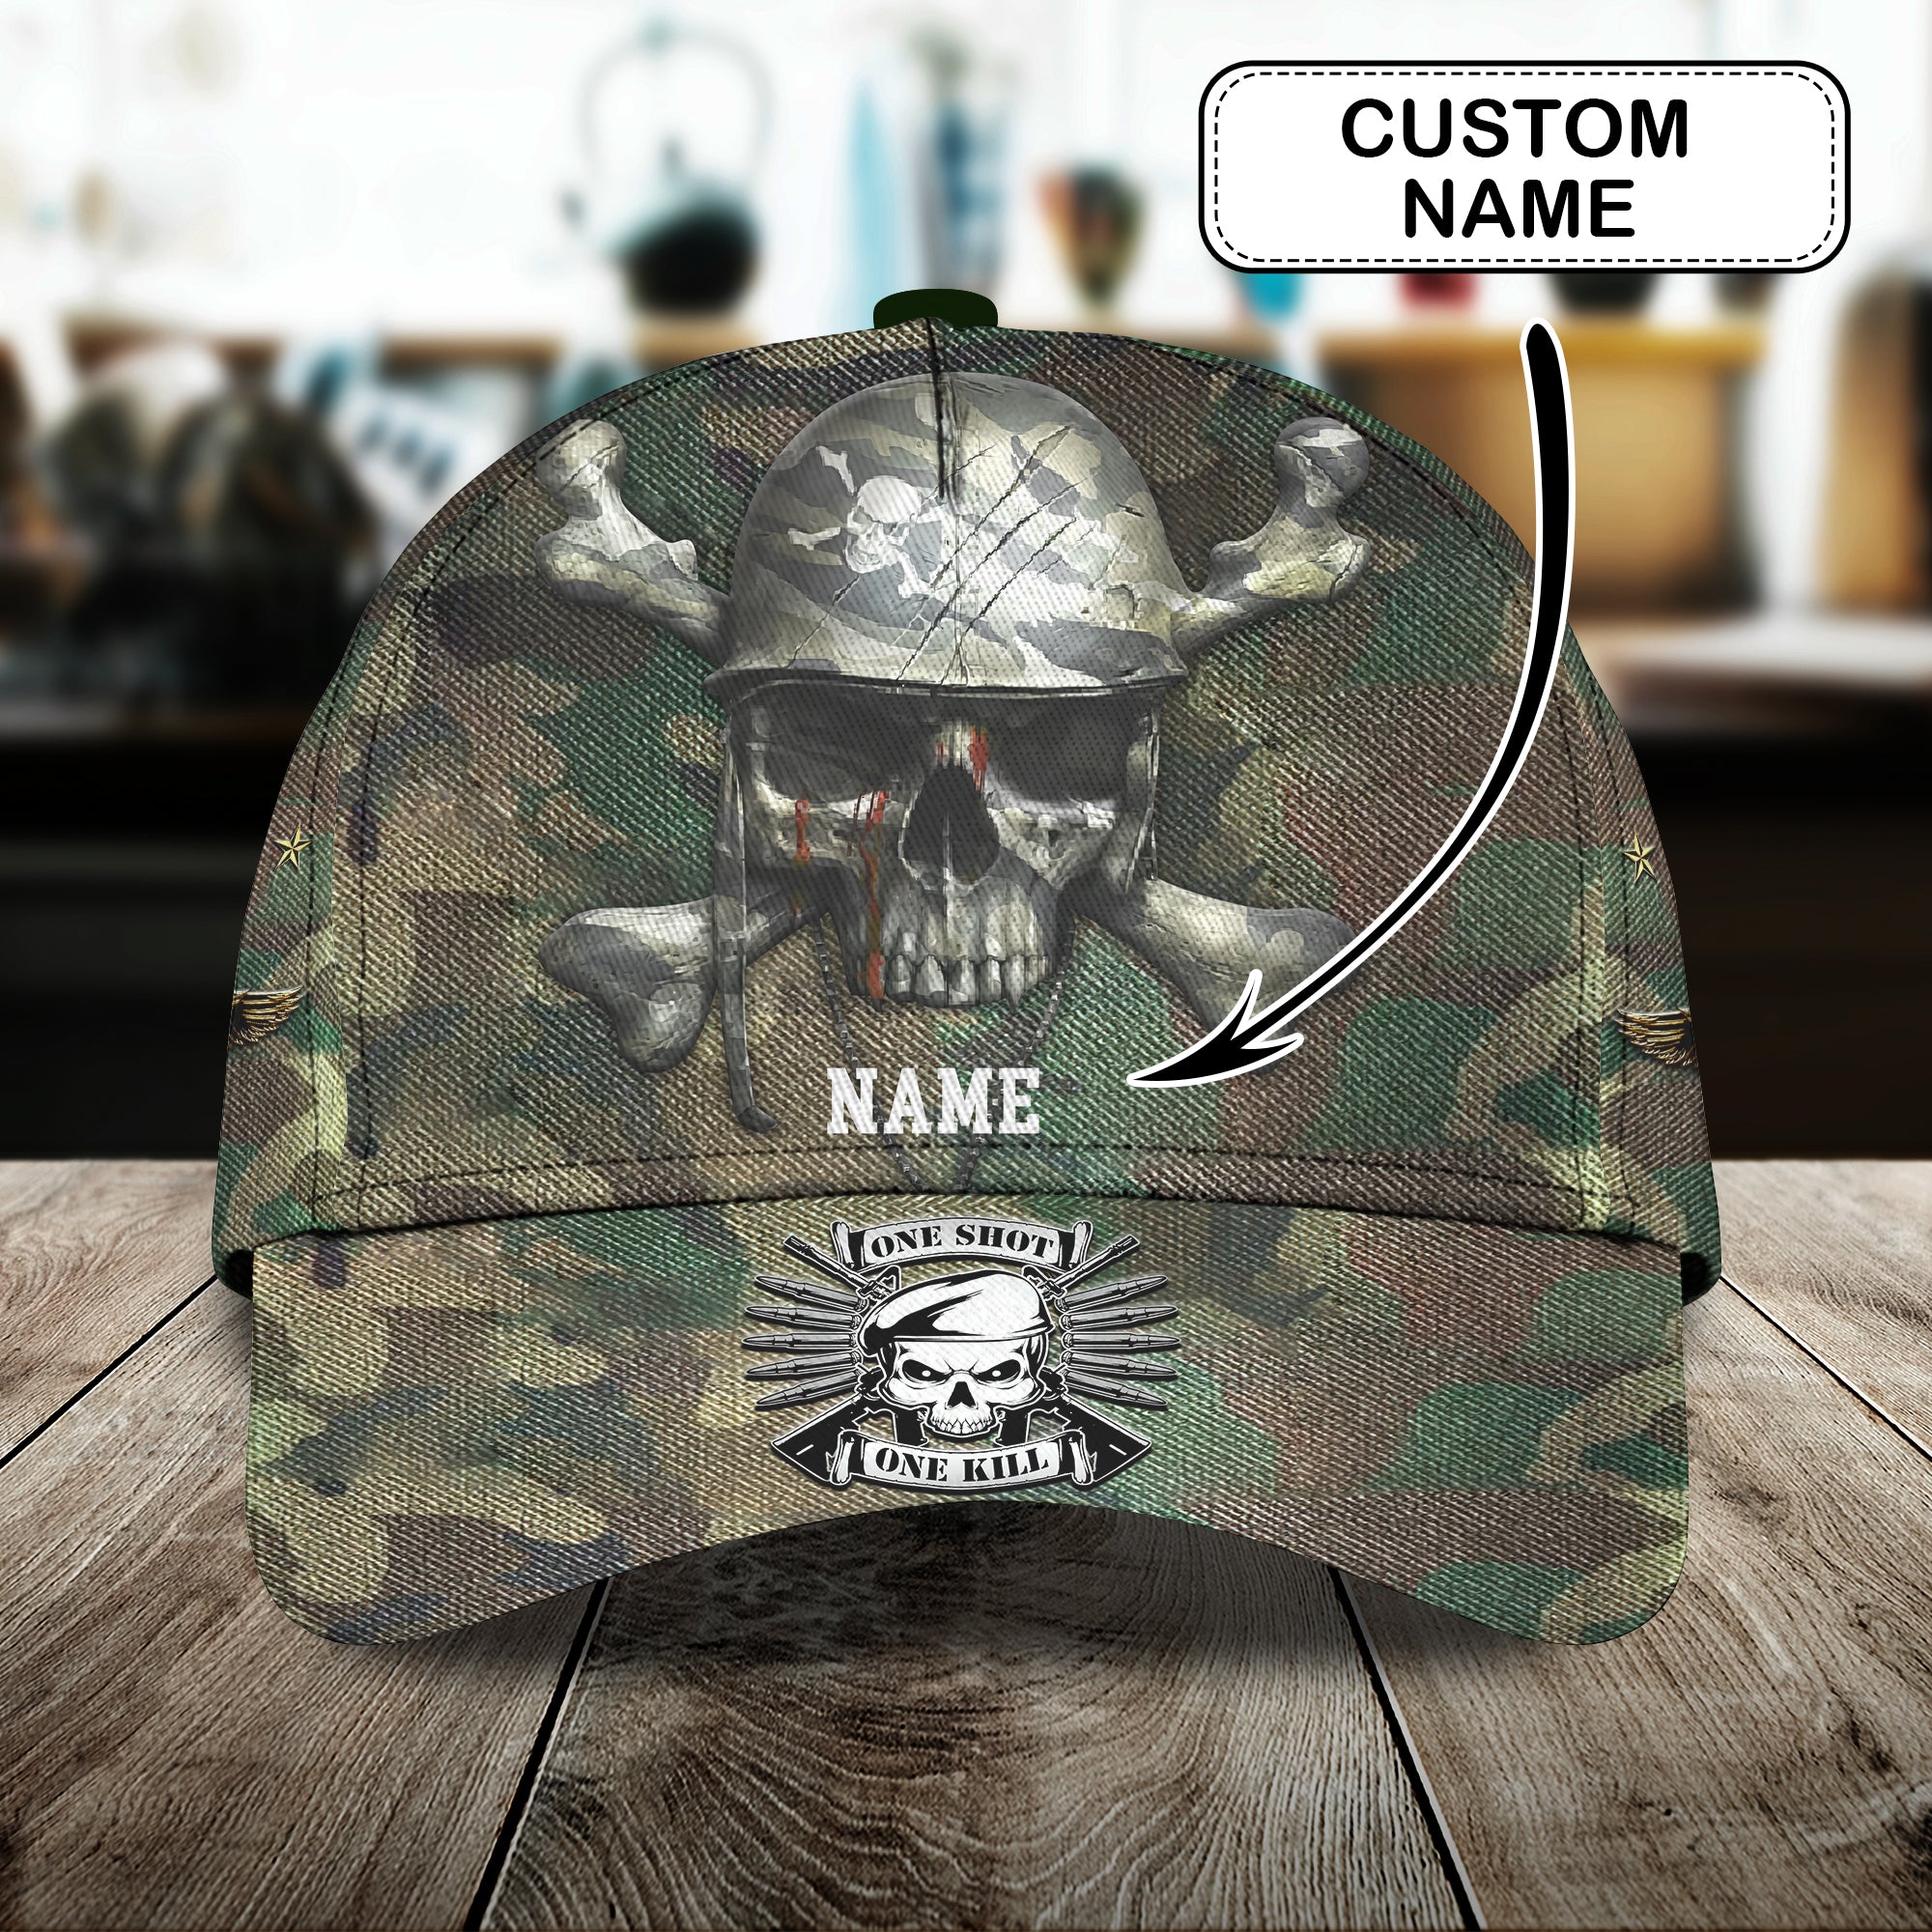 Skull Army - Personalized Name Cap - Loop - Vhv-cap-023